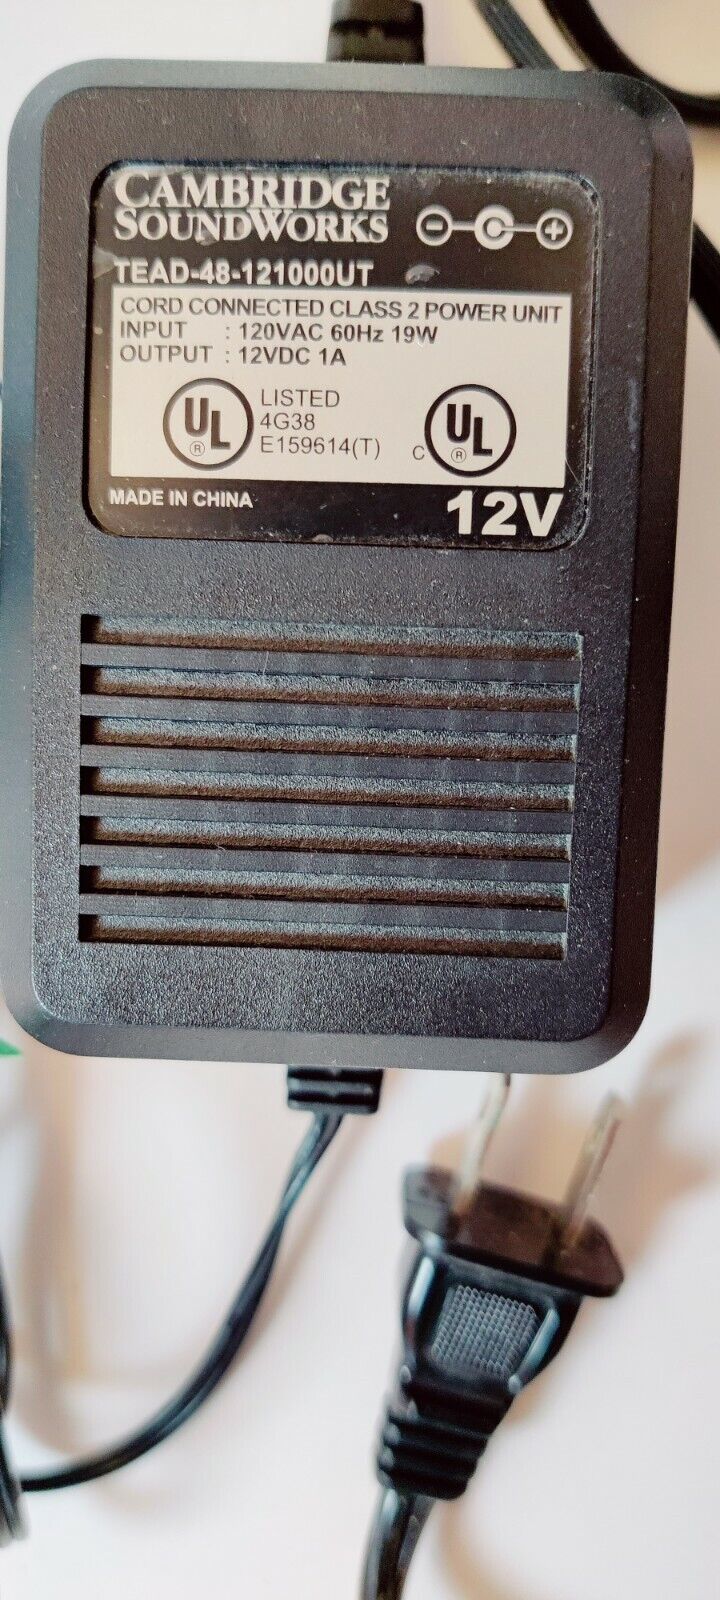 *Brand NEW*Original Cambridge SoundWorks TEAD-48-121000UT 12v 1a AC Adapter Power Supply